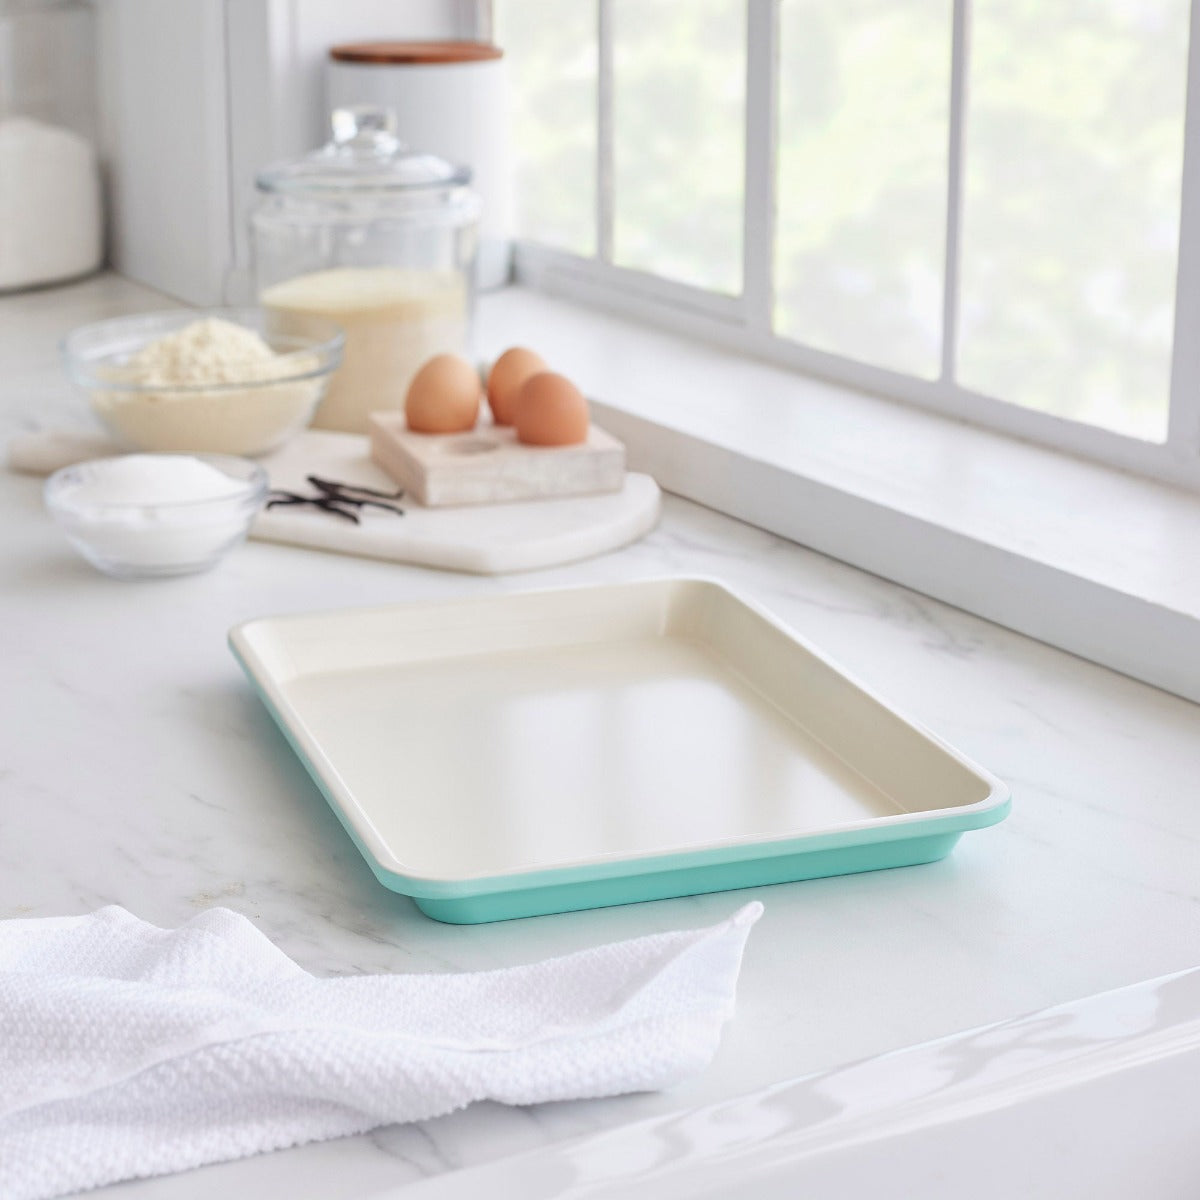 Ceramic Baking Sheet – The Essential